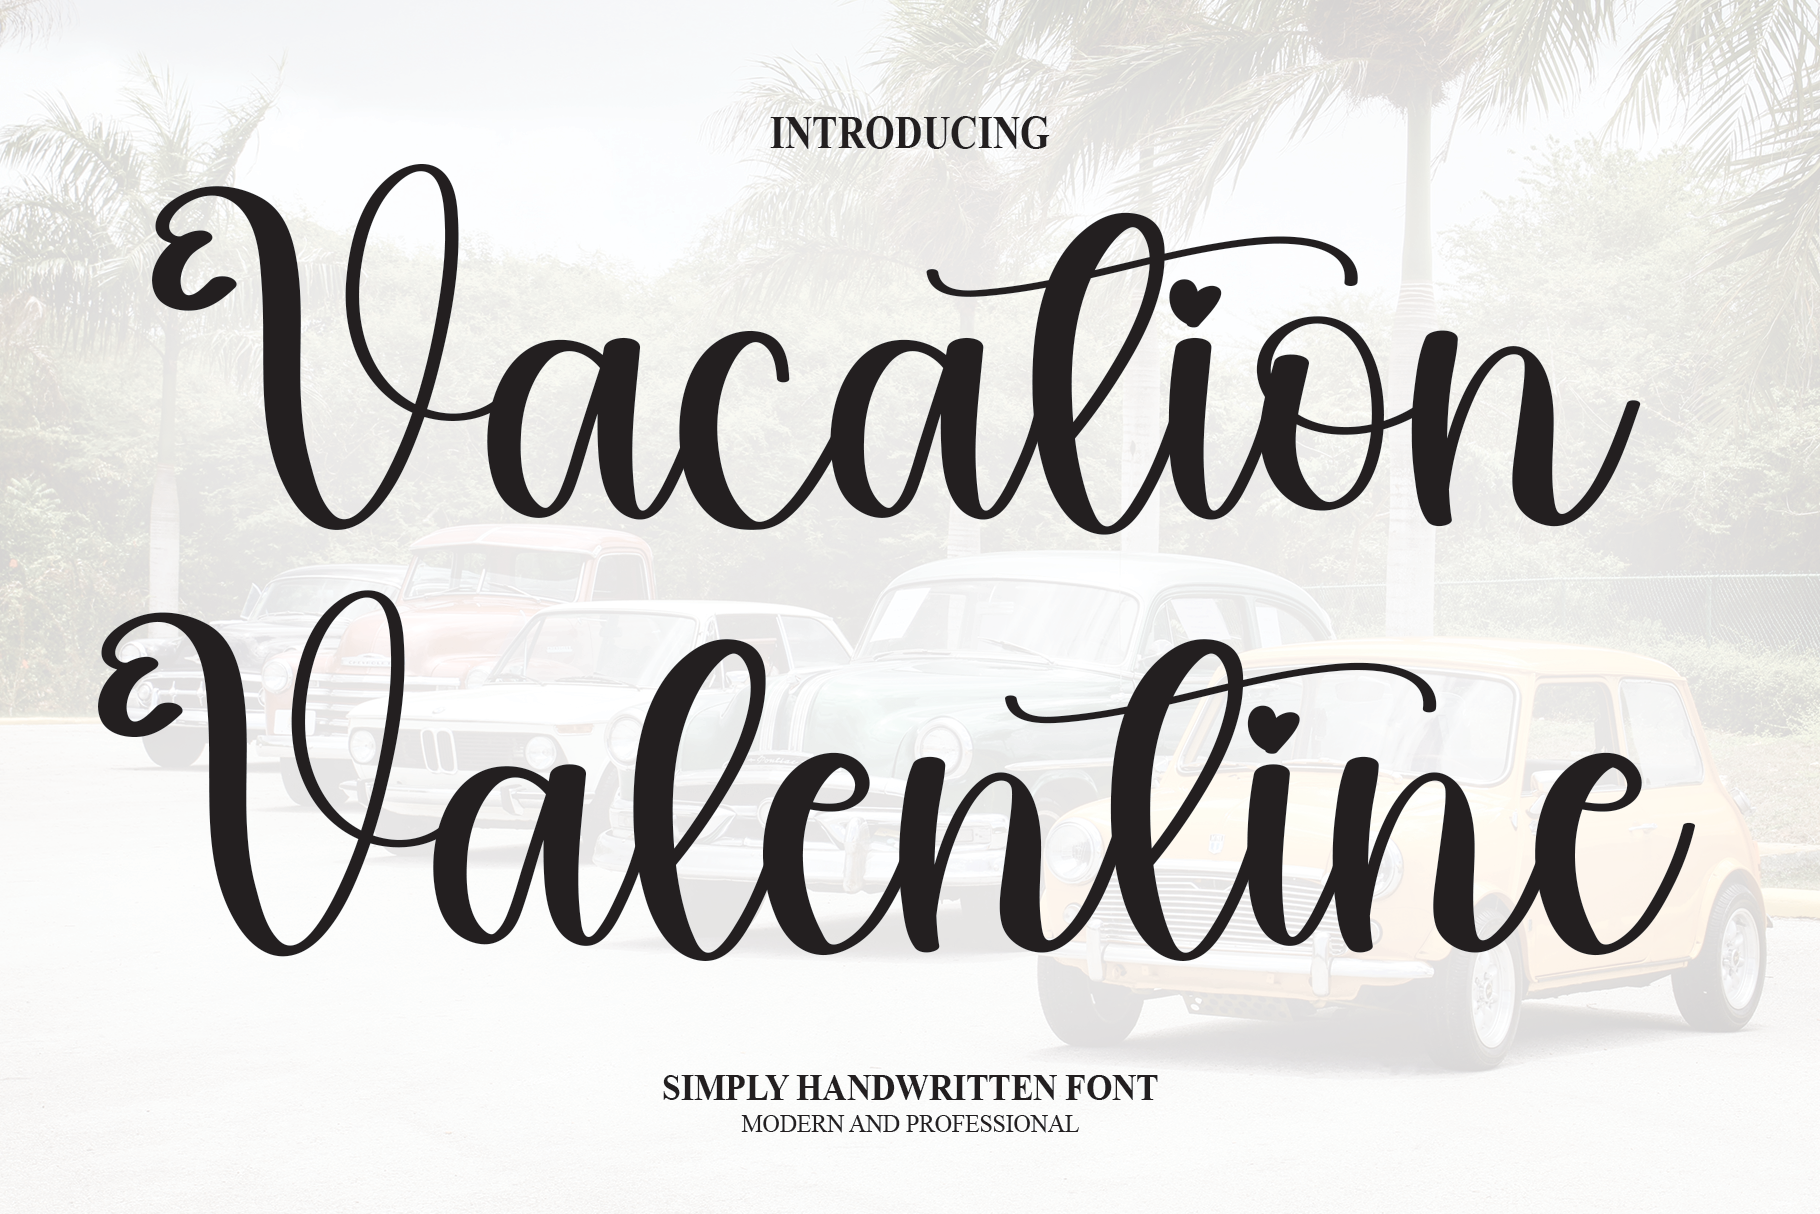 Vacation Valentine Script Font